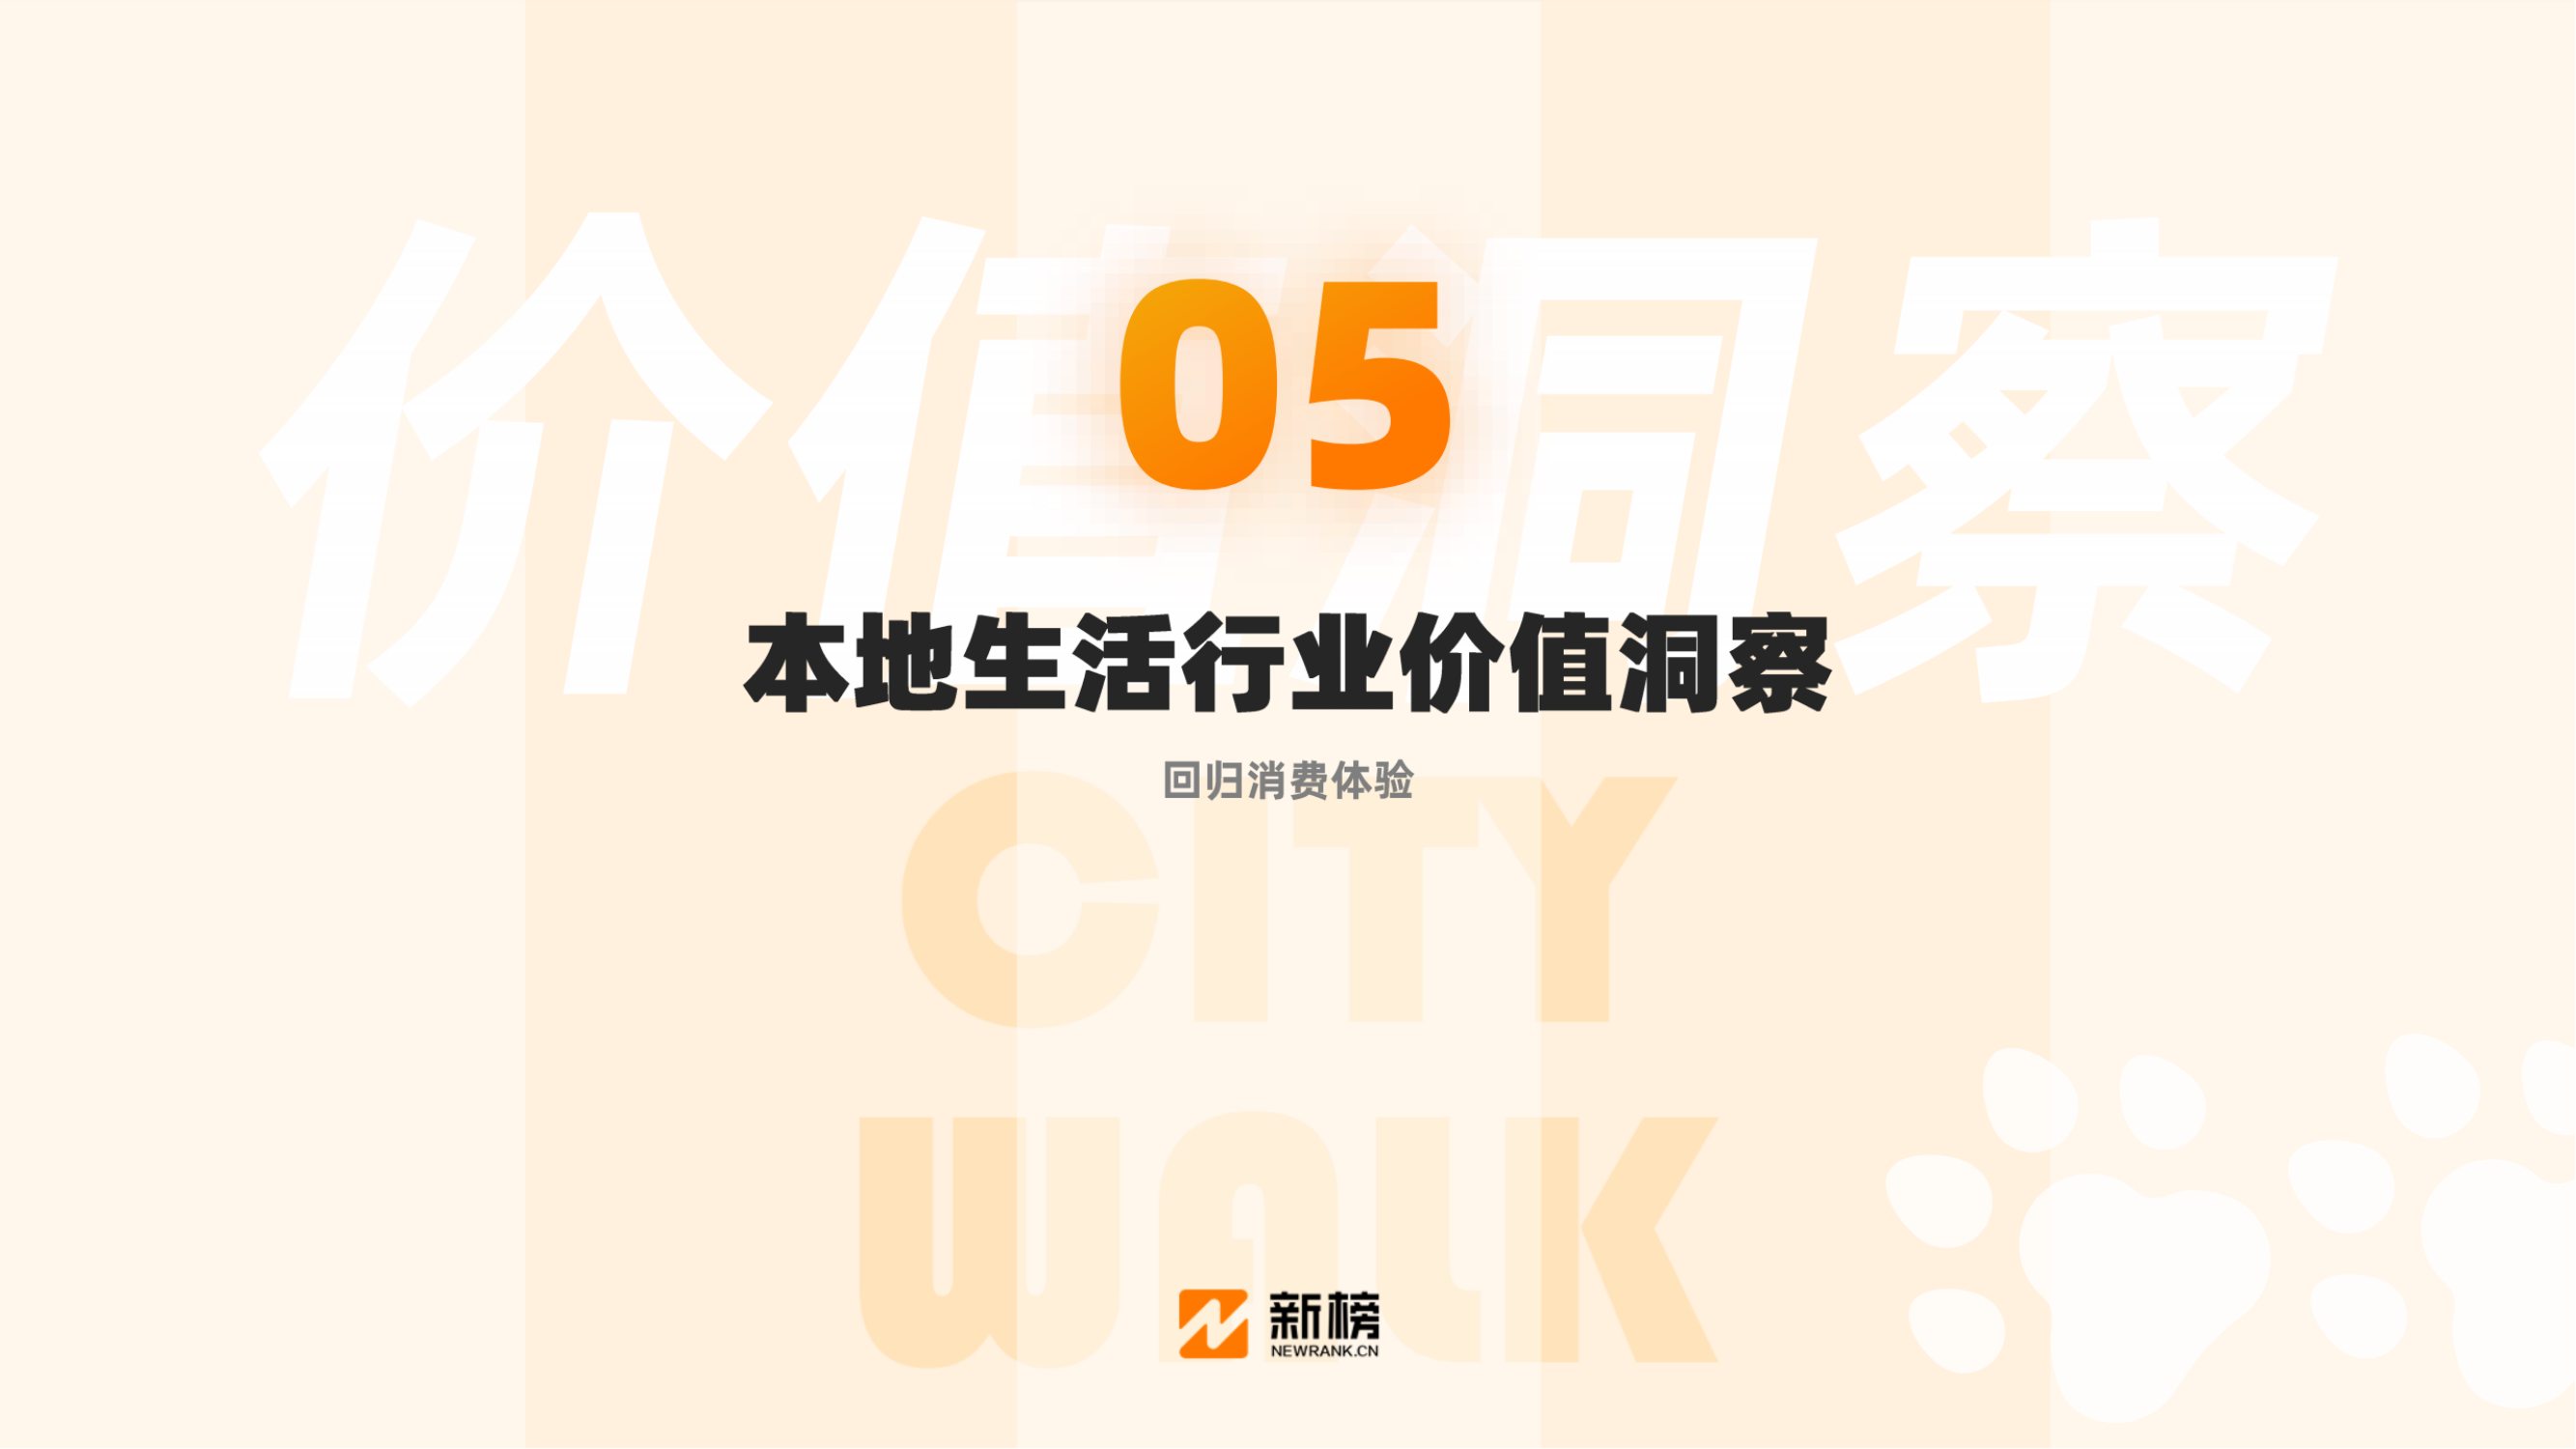 CityWalk本地生活商业价值洞察报告_纯图版_22.png